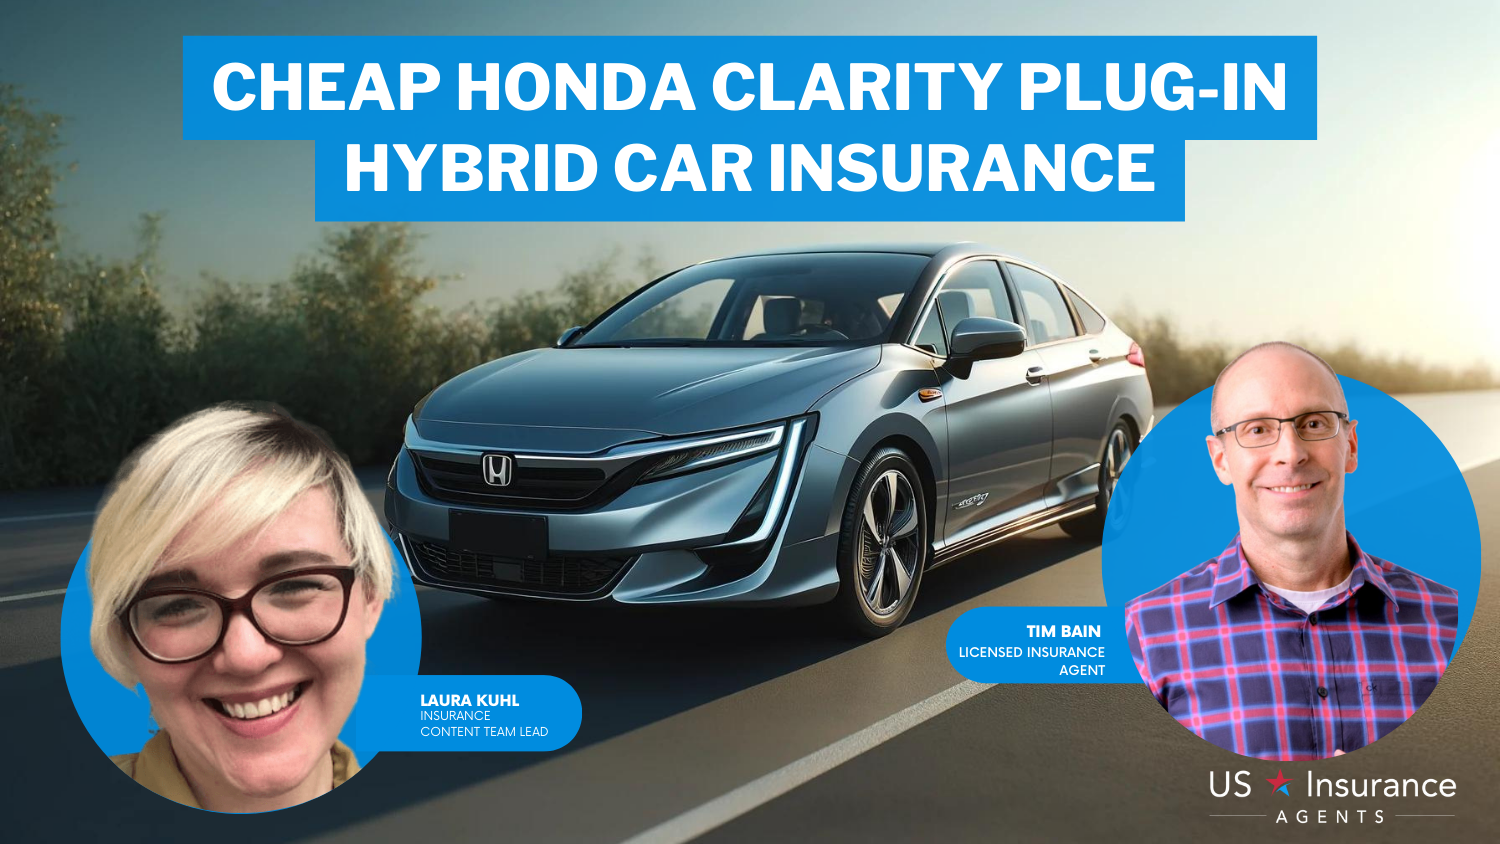 Cheap Honda Clarity Plug-in Hybrid Car Insurance: Liberty Mutual, Nationwide, and Progressive